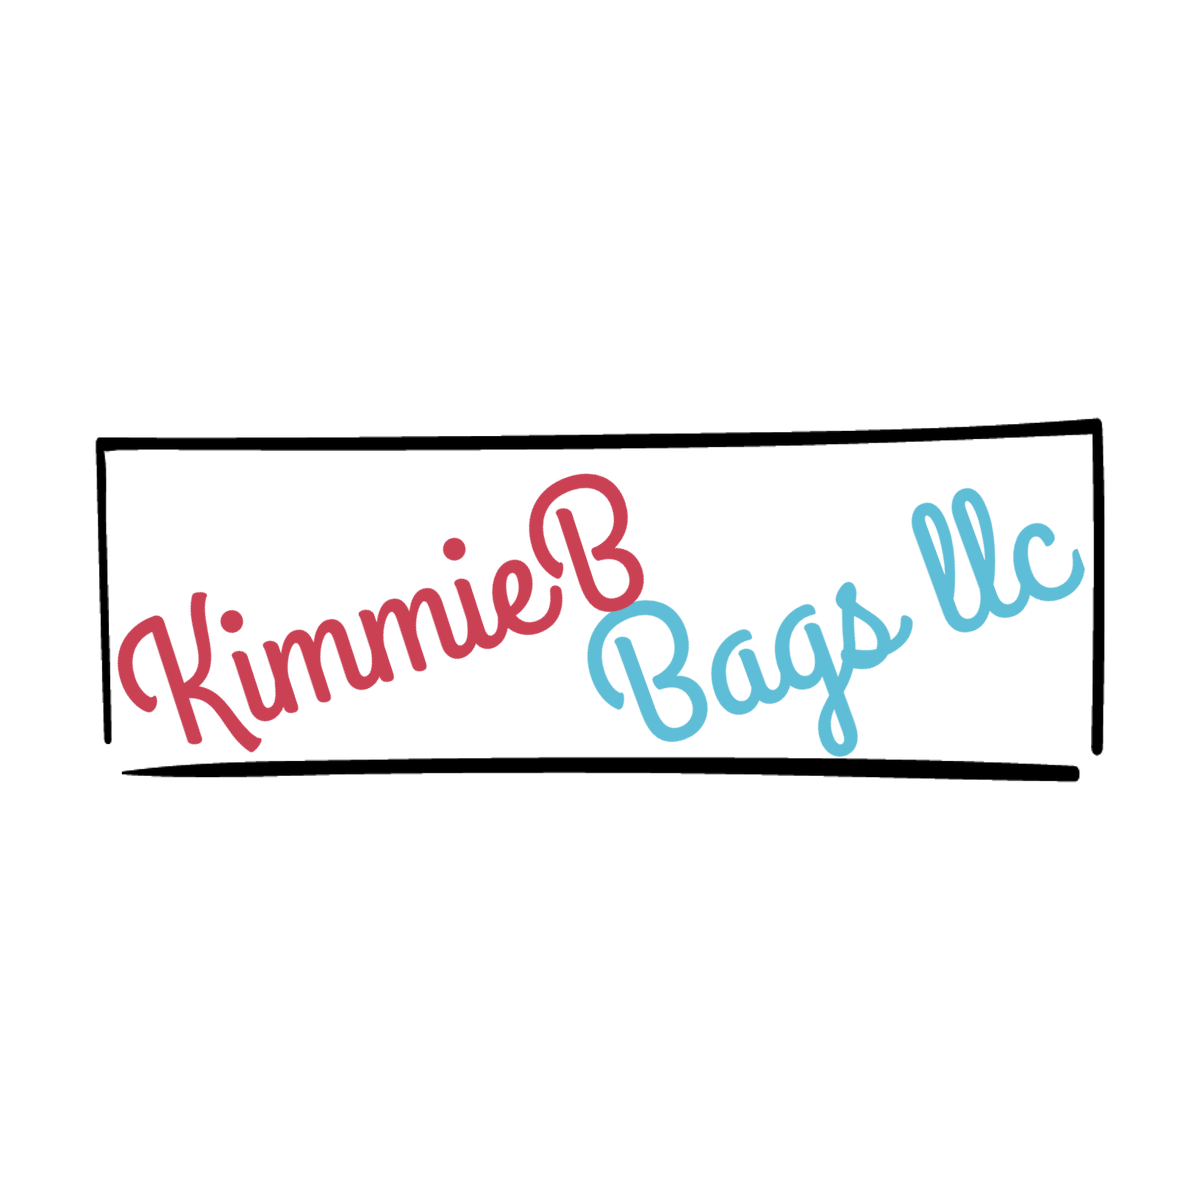 Chanel Bags & Accessories – KimmieBBags LLC